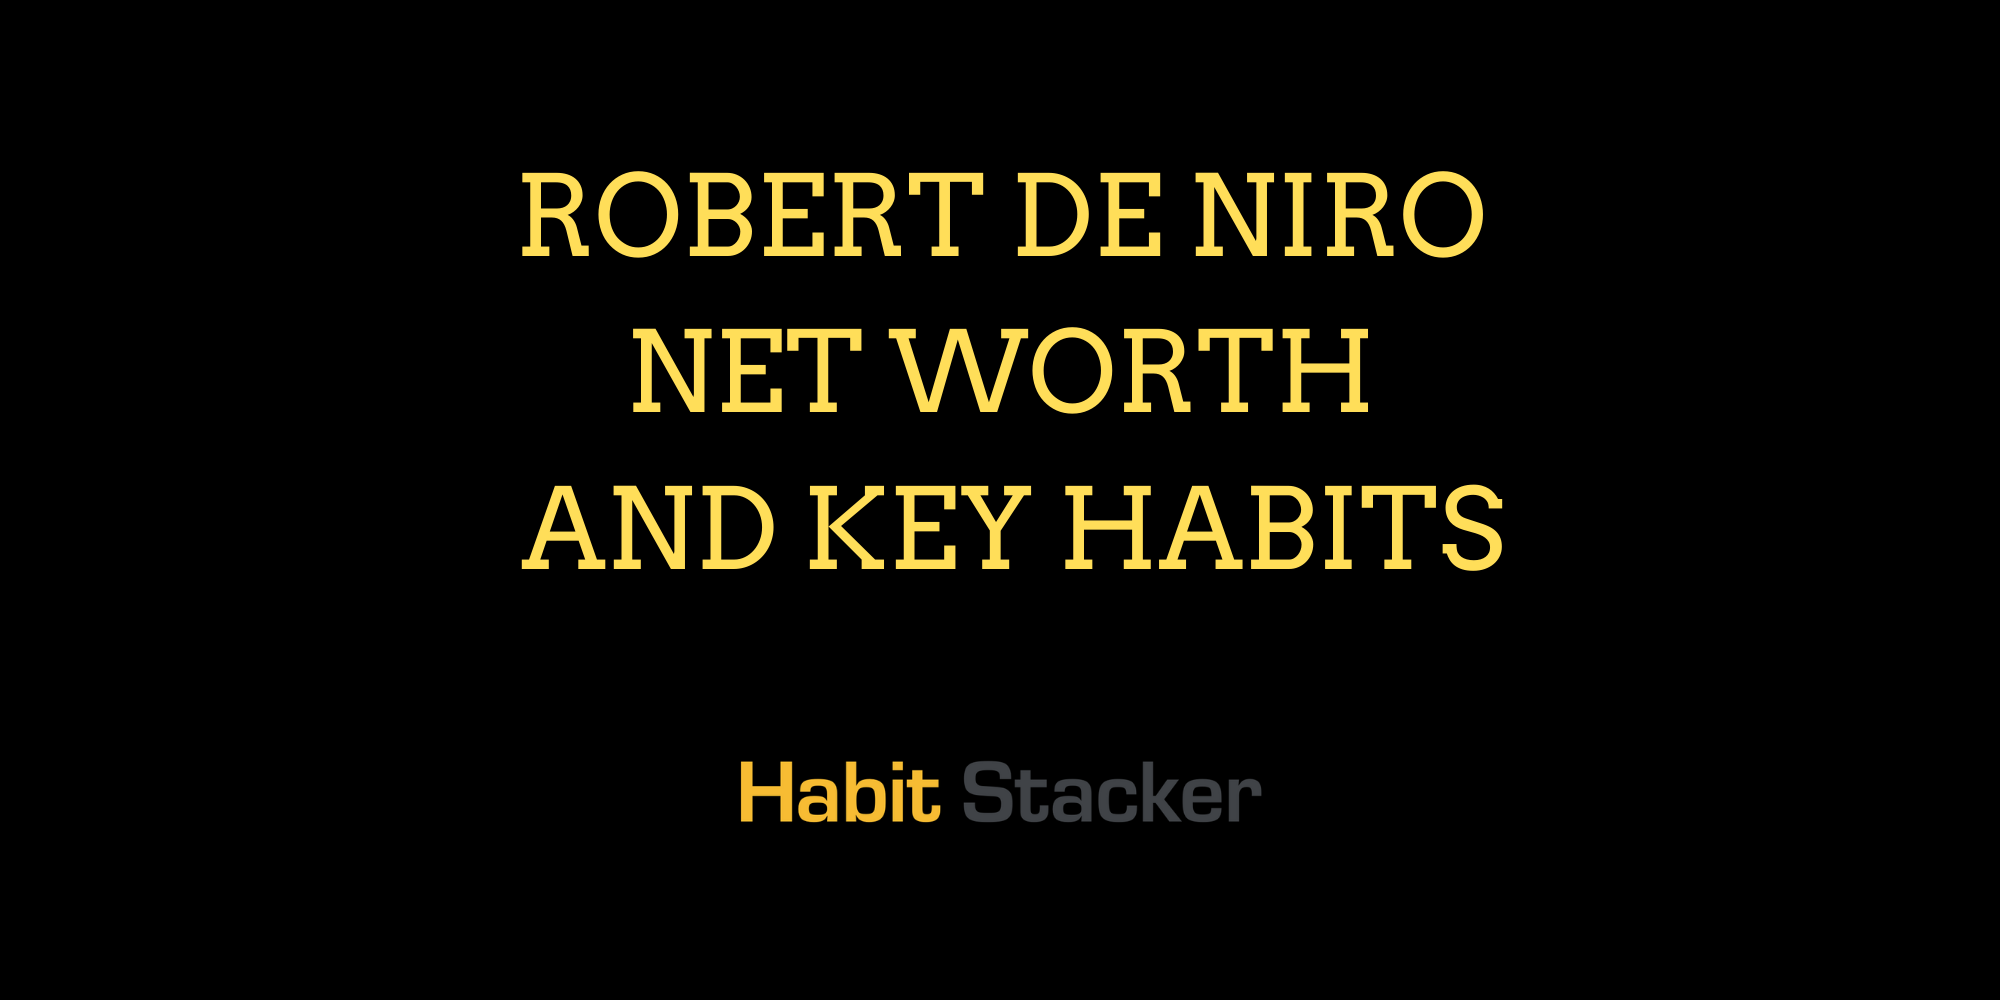 Robert De Niro Net Worth and Key Habits